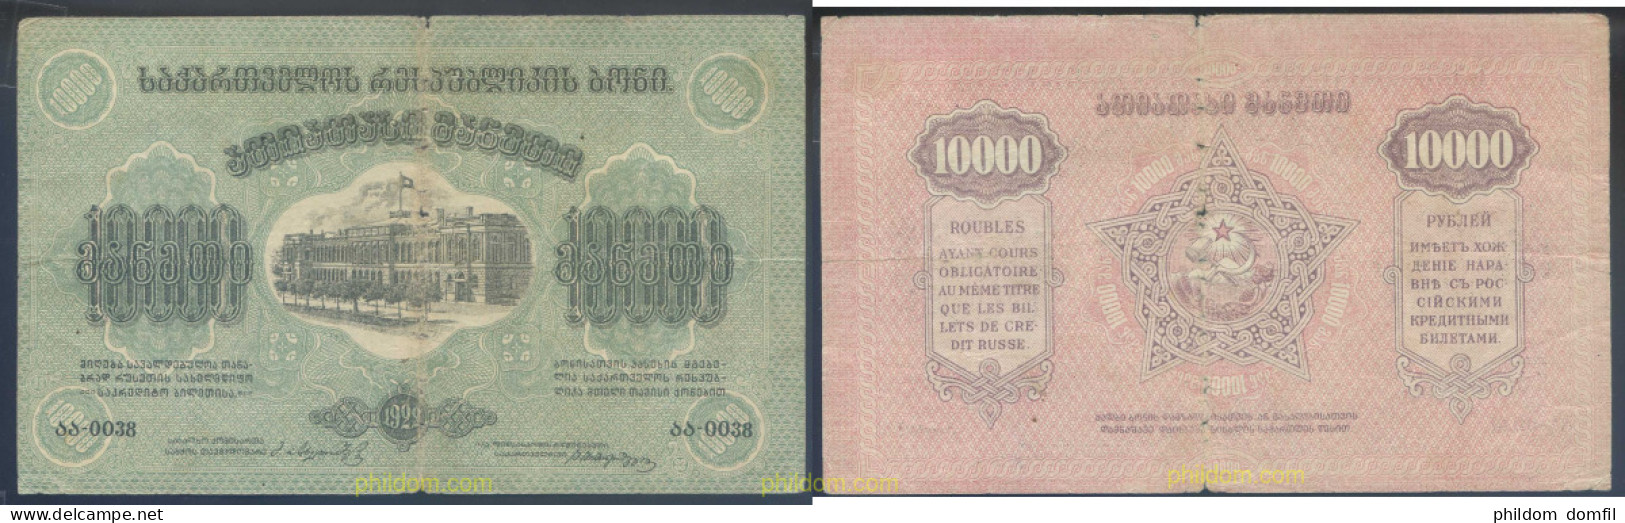 2866 GEORGIA 1922 RUSSIA GEORIA GEORGIA 10000 RUBLI 1922 - Georgia